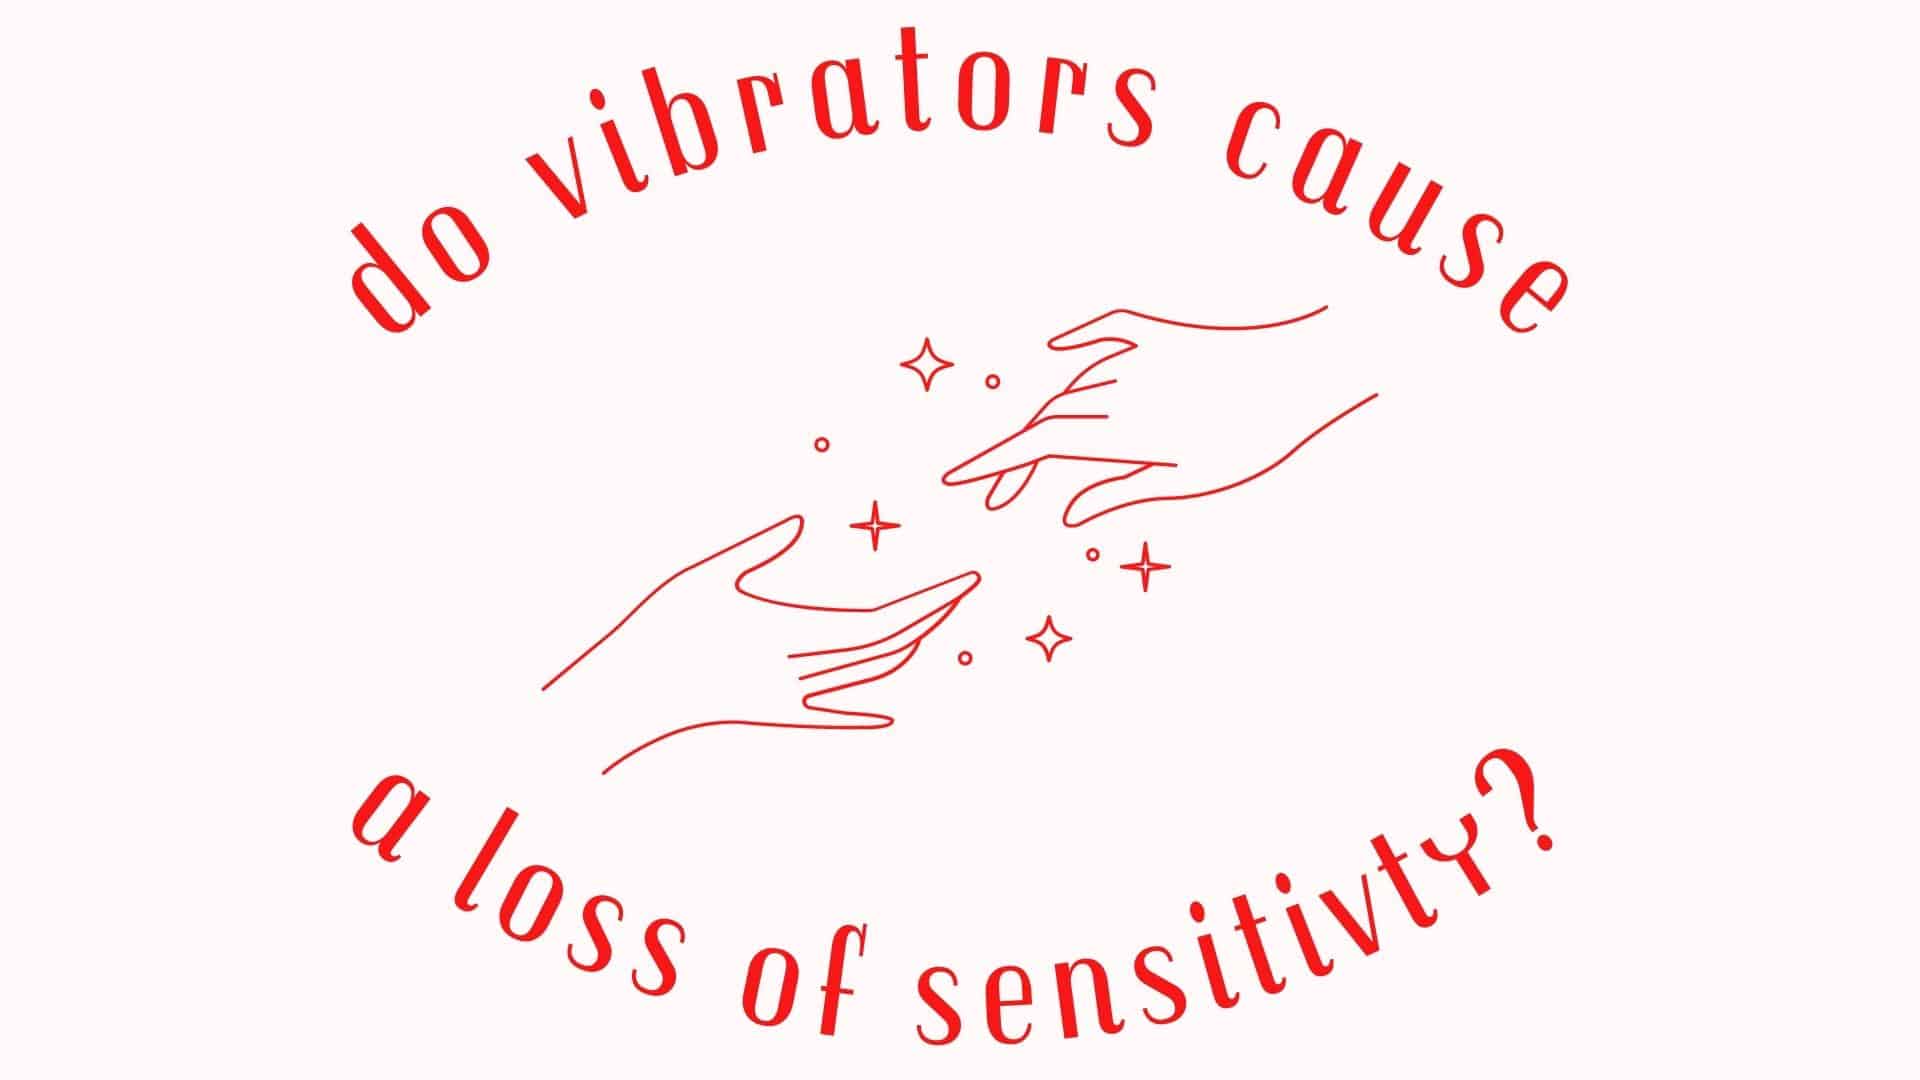 Do Vibrators Really Cause a Loss of Sensitivity?